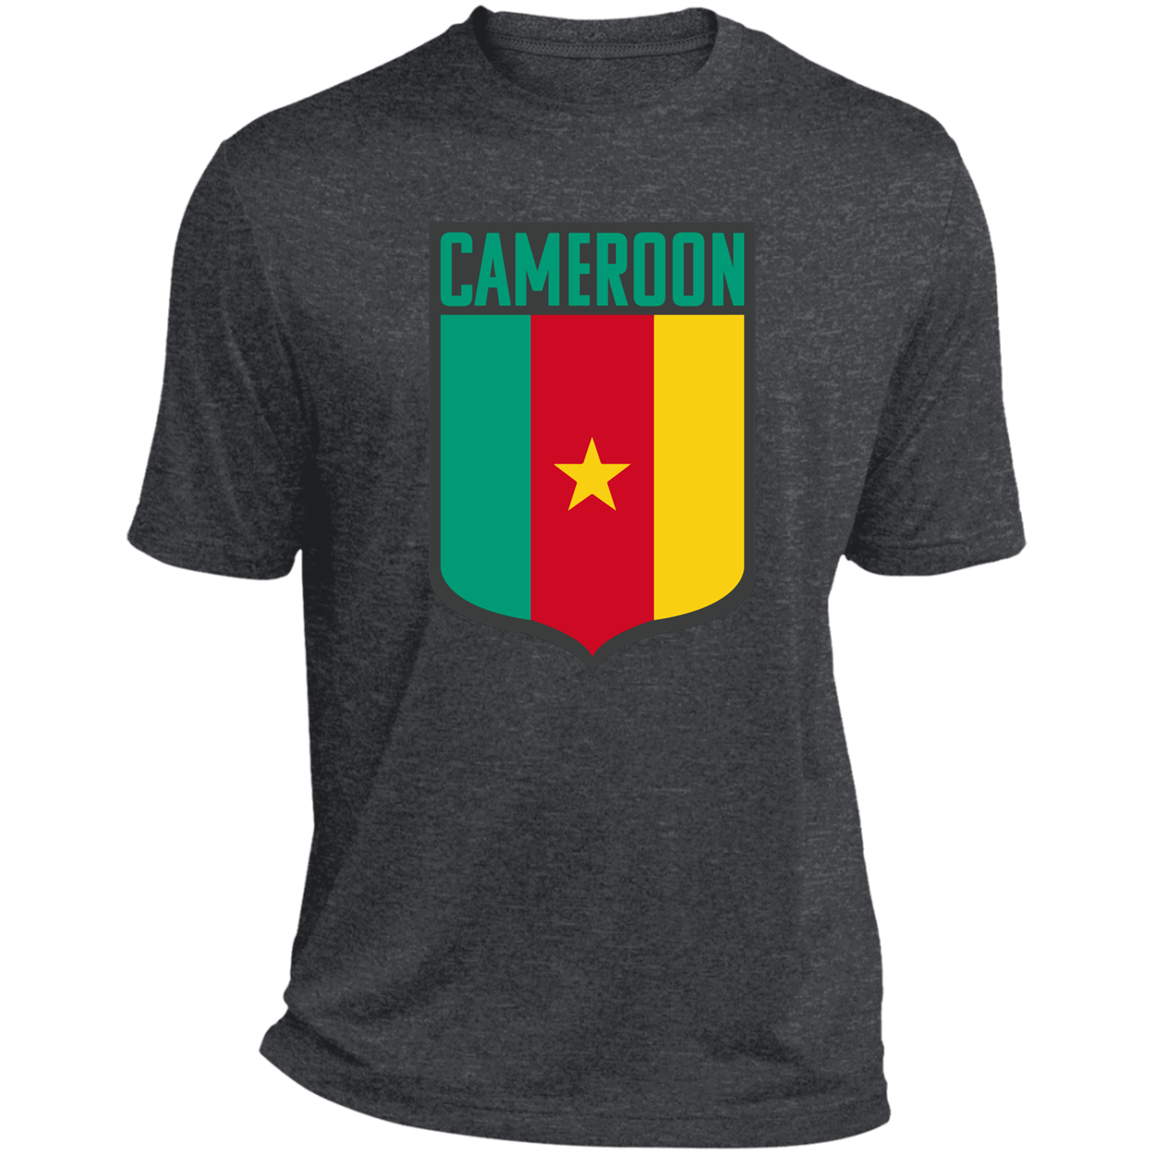 Cameroon Football Team Emblem Men's Sports T-Shirt